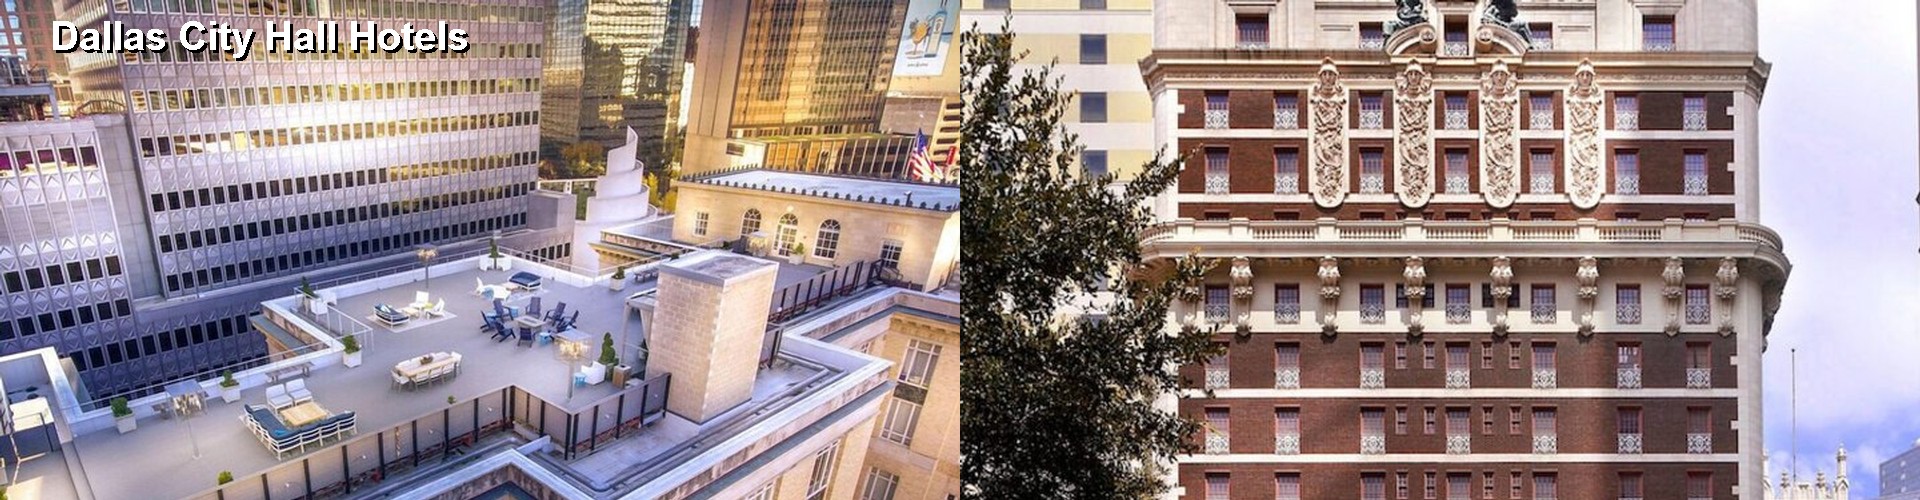 4 Best Hotels near Dallas City Hall